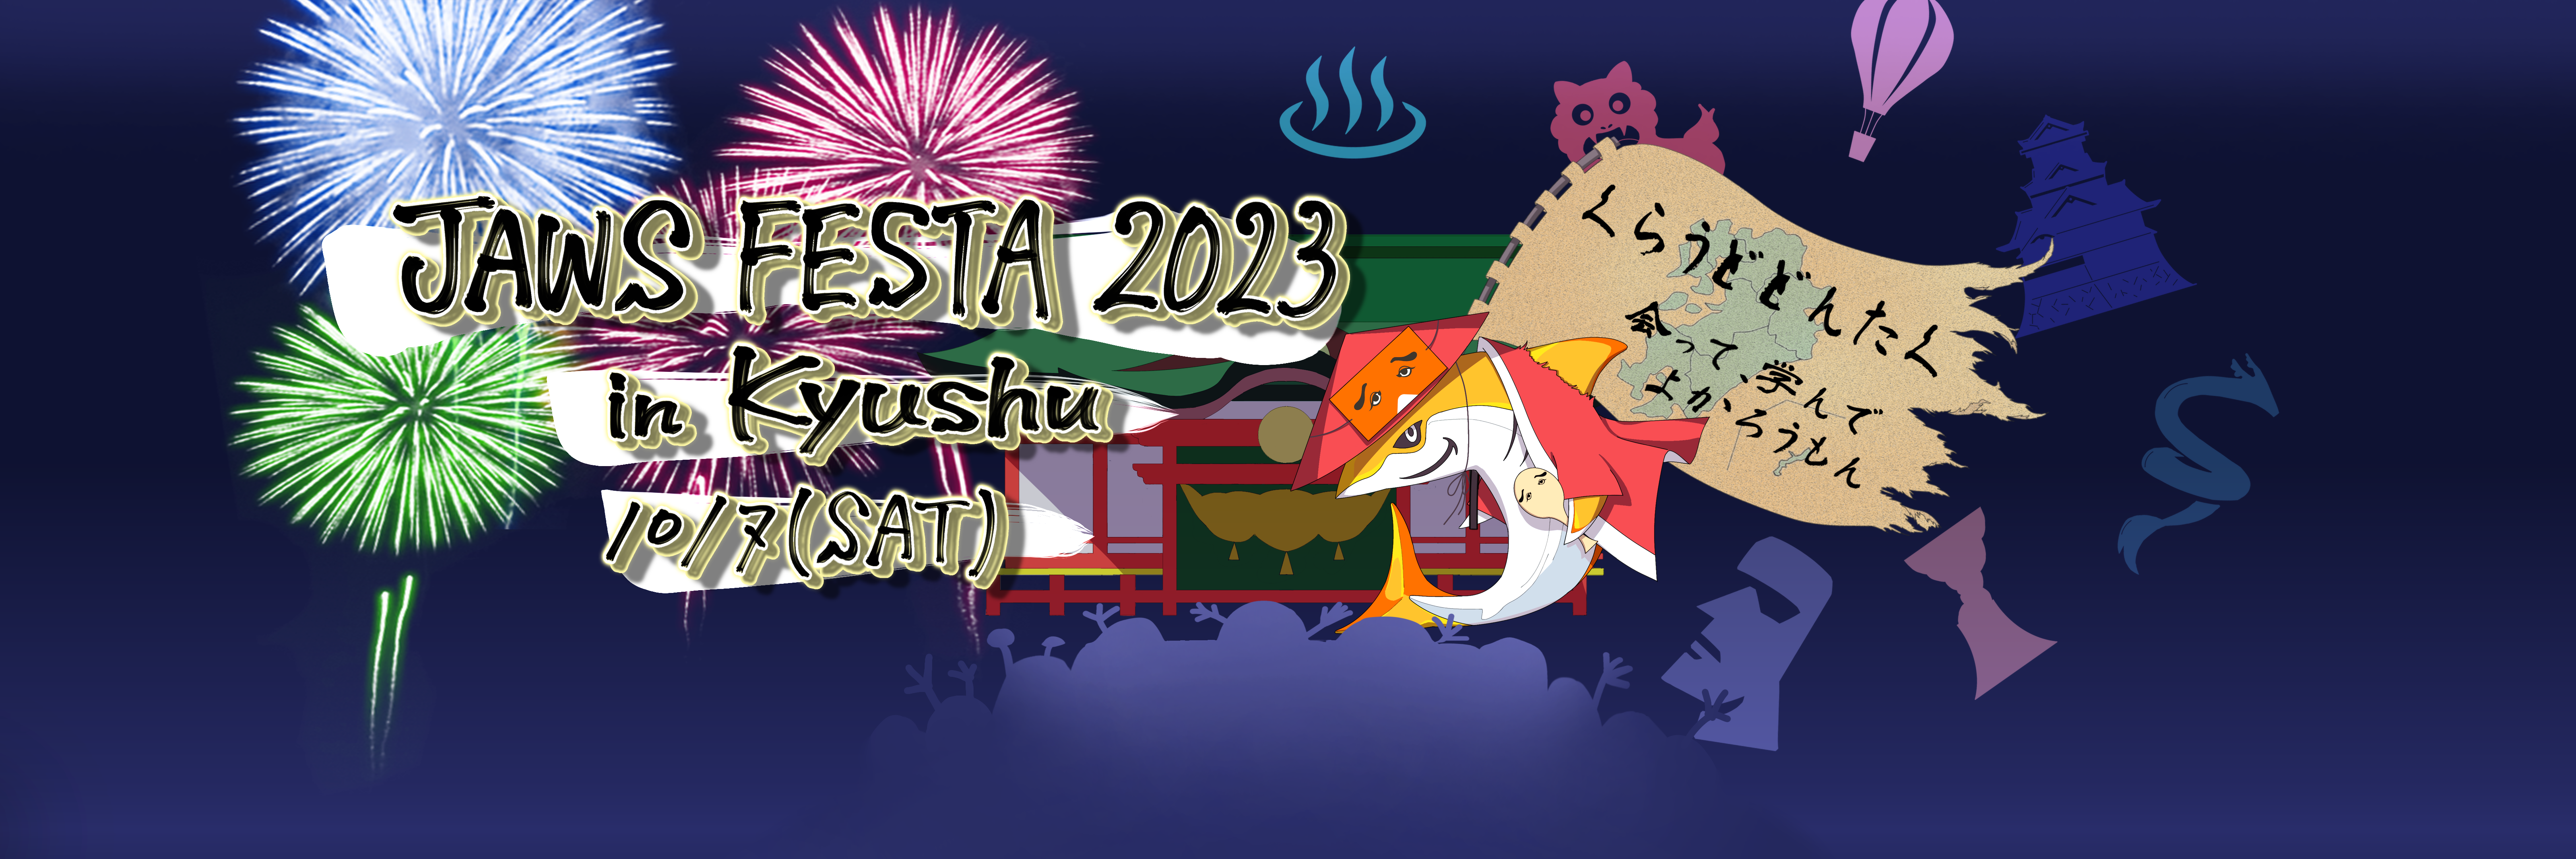 JAWS FESTA 2023 in Kyushu